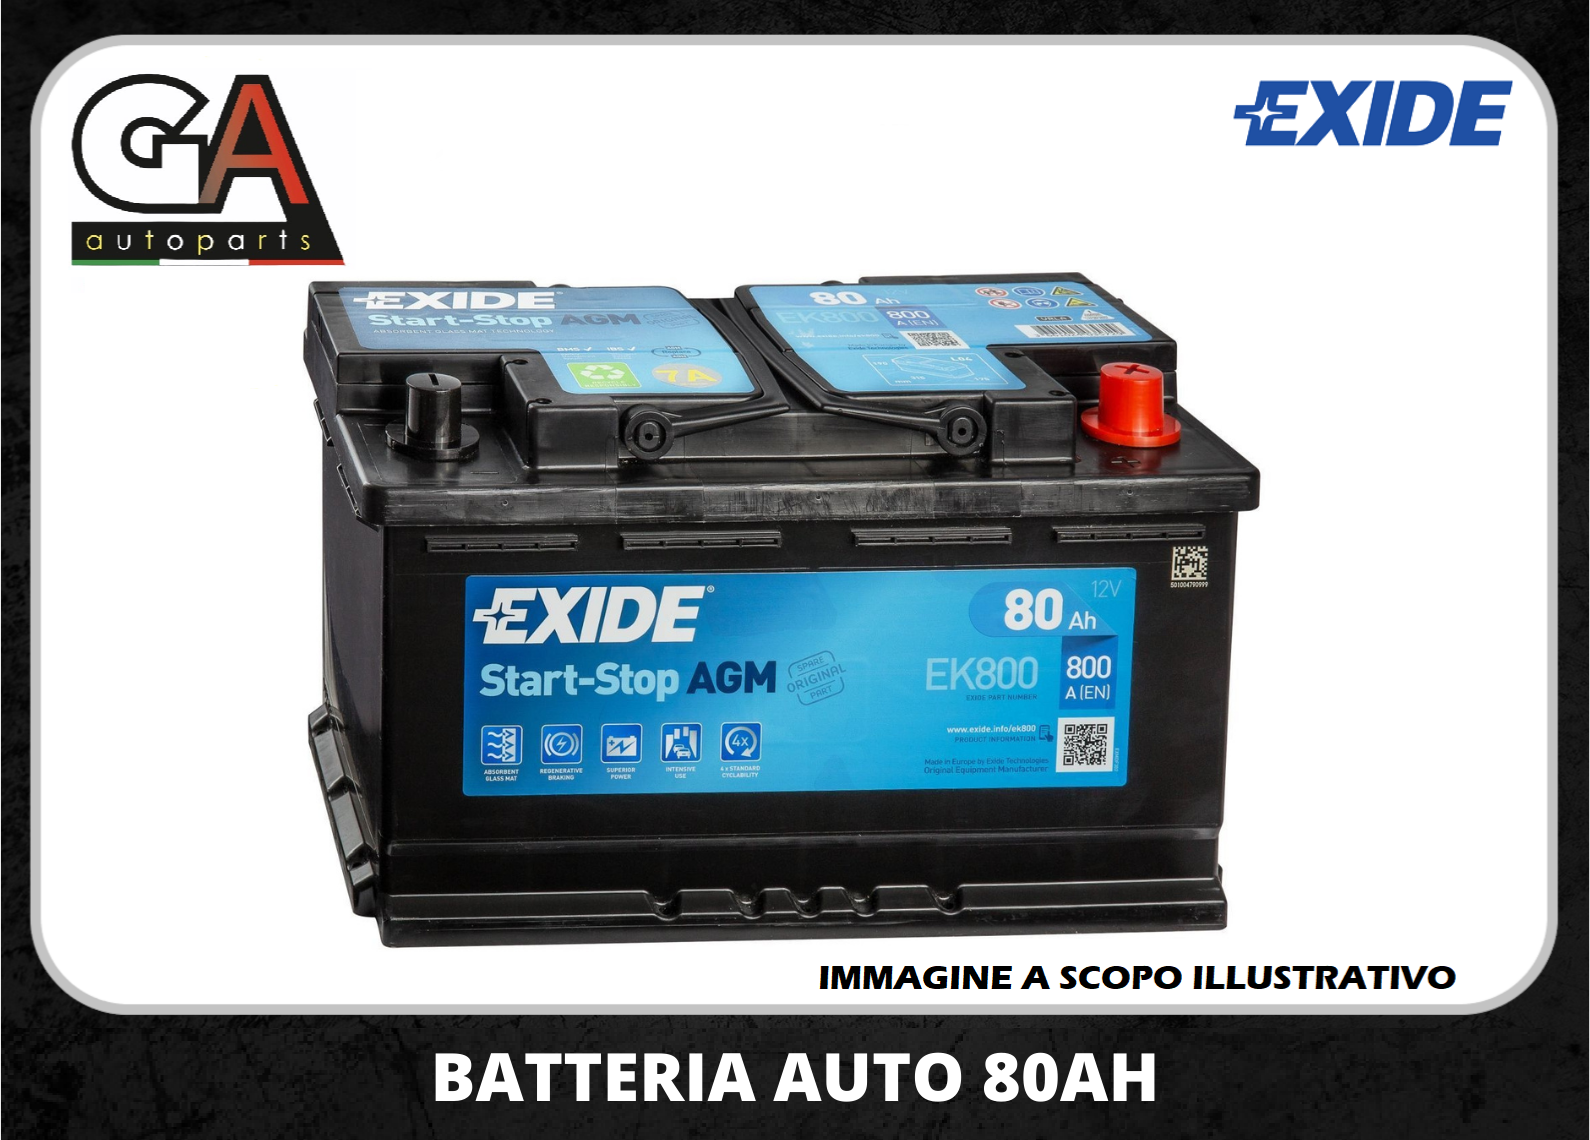 Batteria auto 80 ah 12v EXIDE 800A START STOP AGM NUOVA EK800 - Ricambi Auto  GAutopartsProdotto